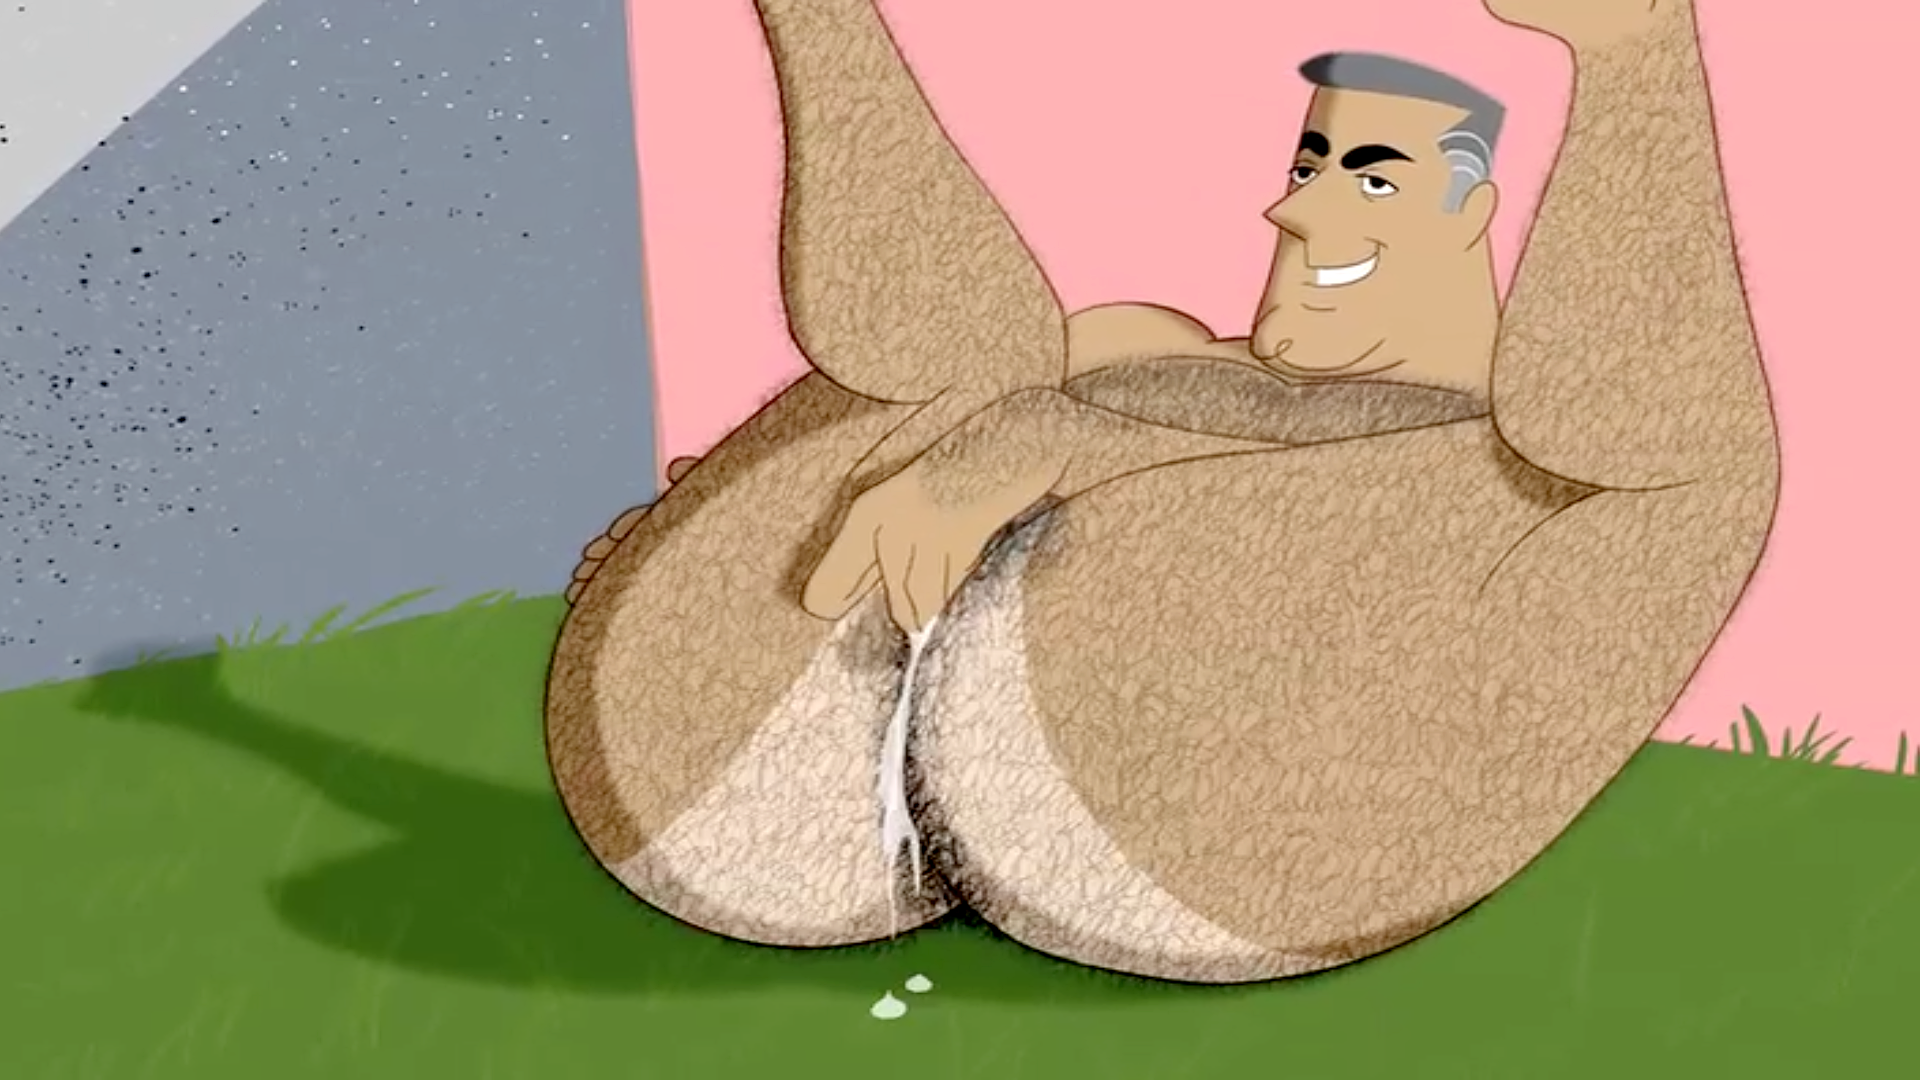 Animan Dr. Butt Country Club Gangbang Gay Toon Porn